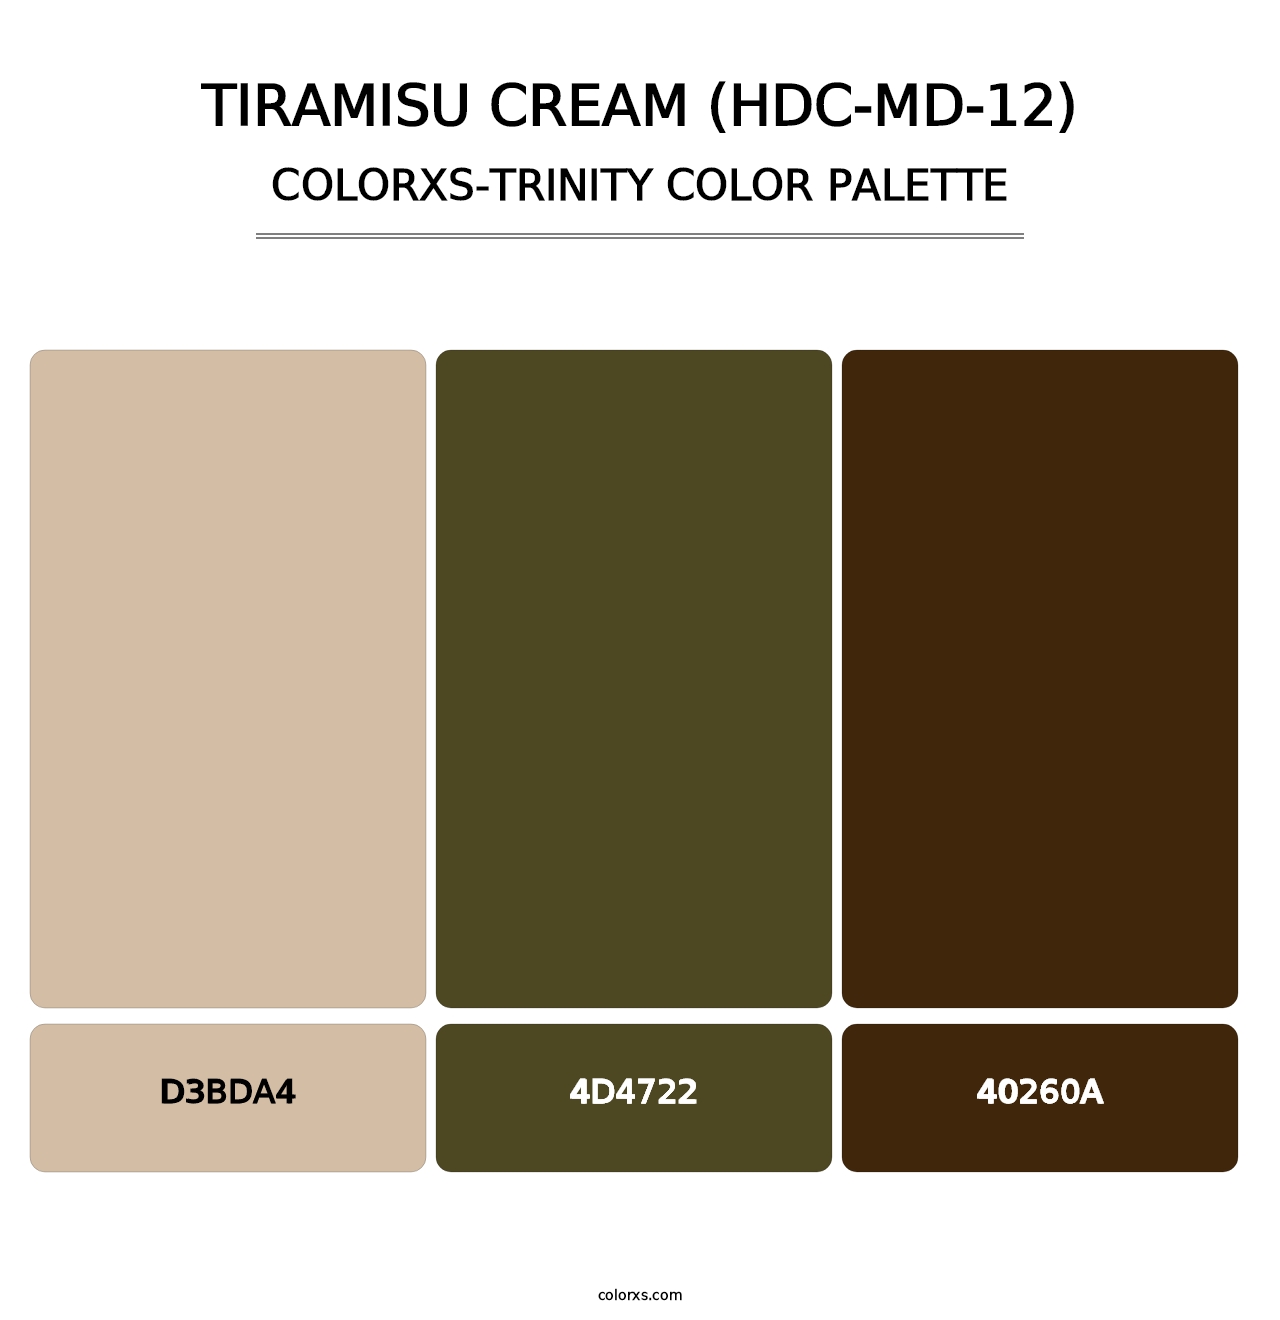 Tiramisu Cream (HDC-MD-12) - Colorxs Trinity Palette